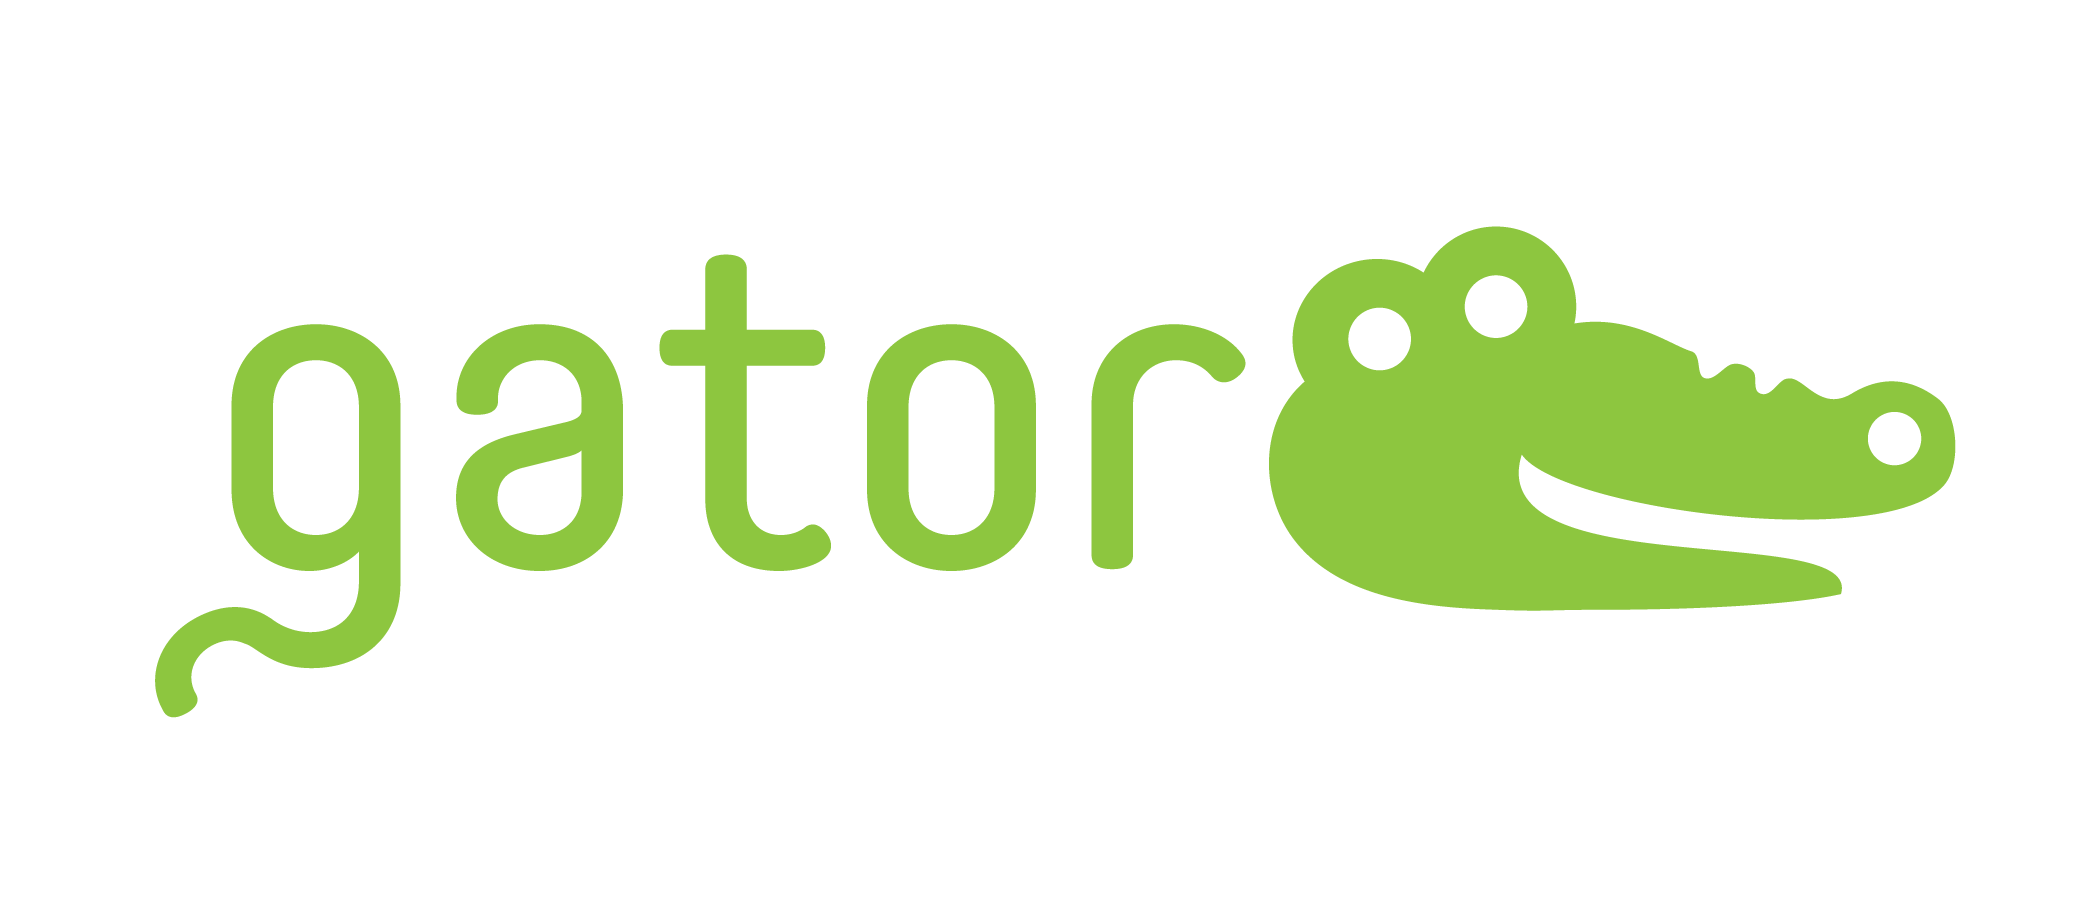 Gator Bio logo